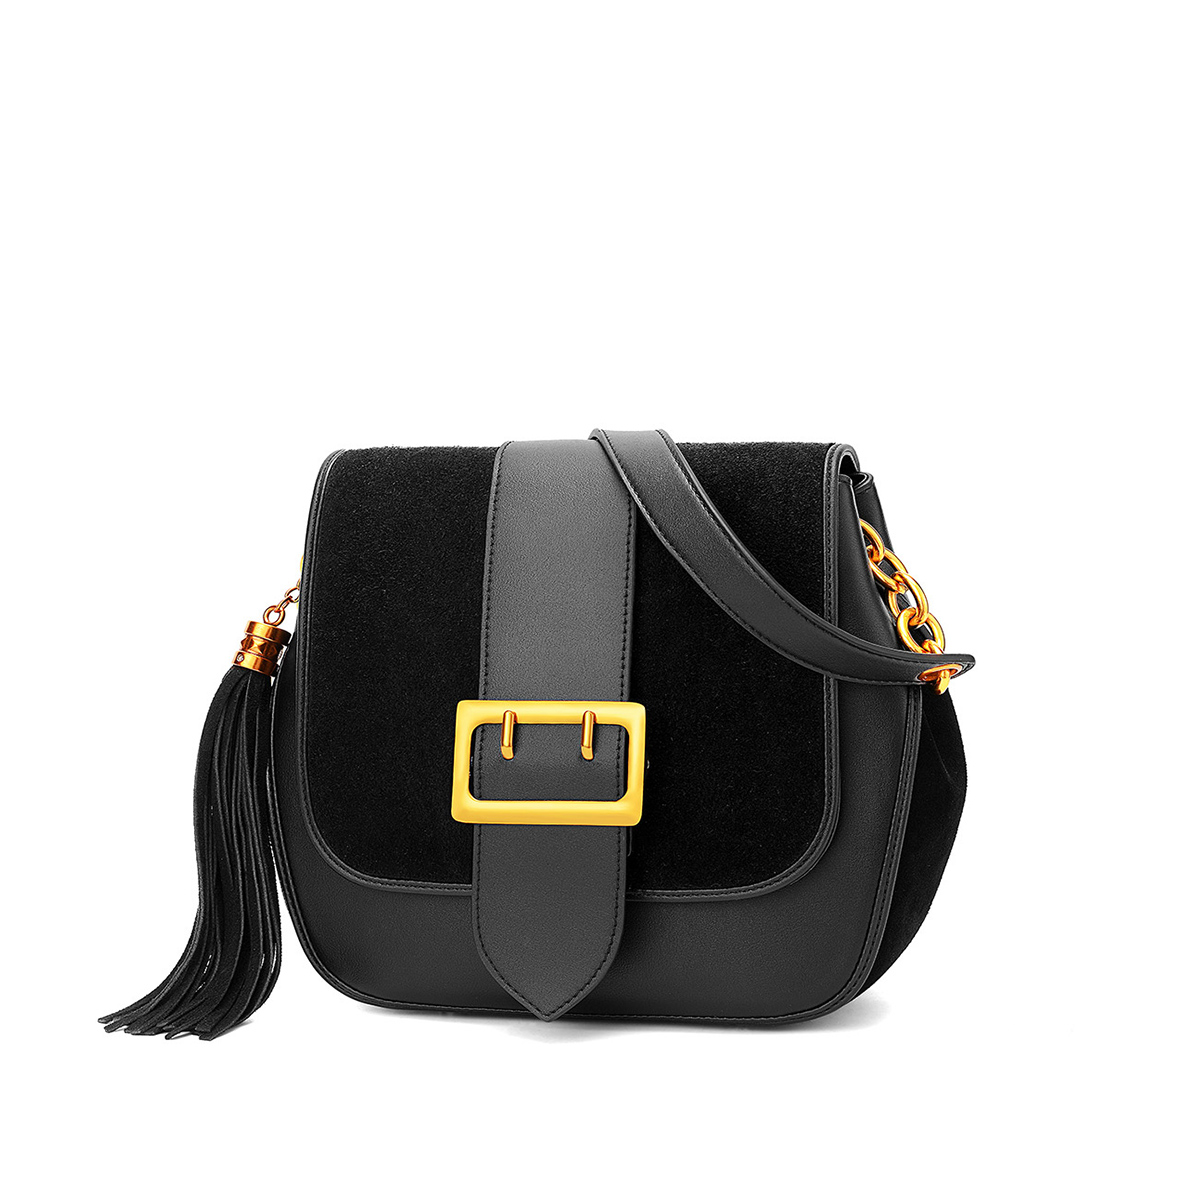 137bag:Retro Fashion Saddle Handbags Autumn And Winter New Leather Messenger Bags 